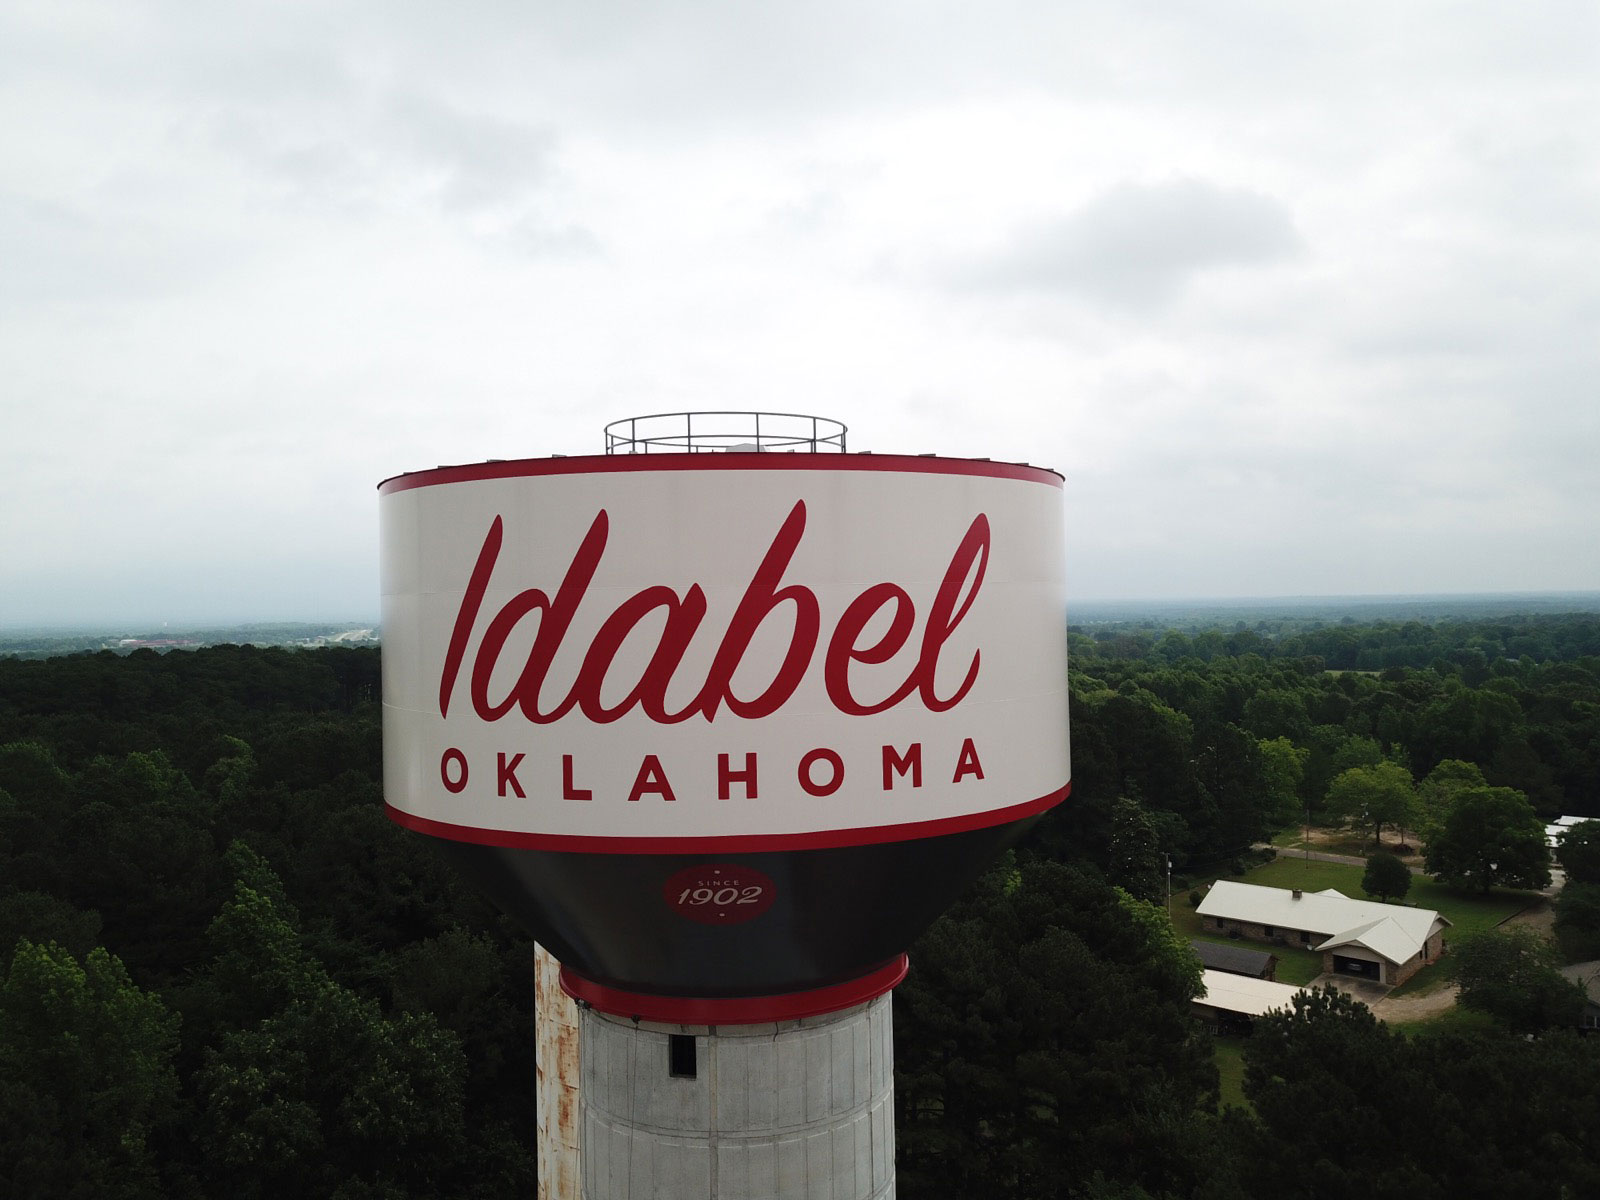 Idabel, Oklahoma, Induron, PermaGloss, Landmark Structures, Wall Engineering